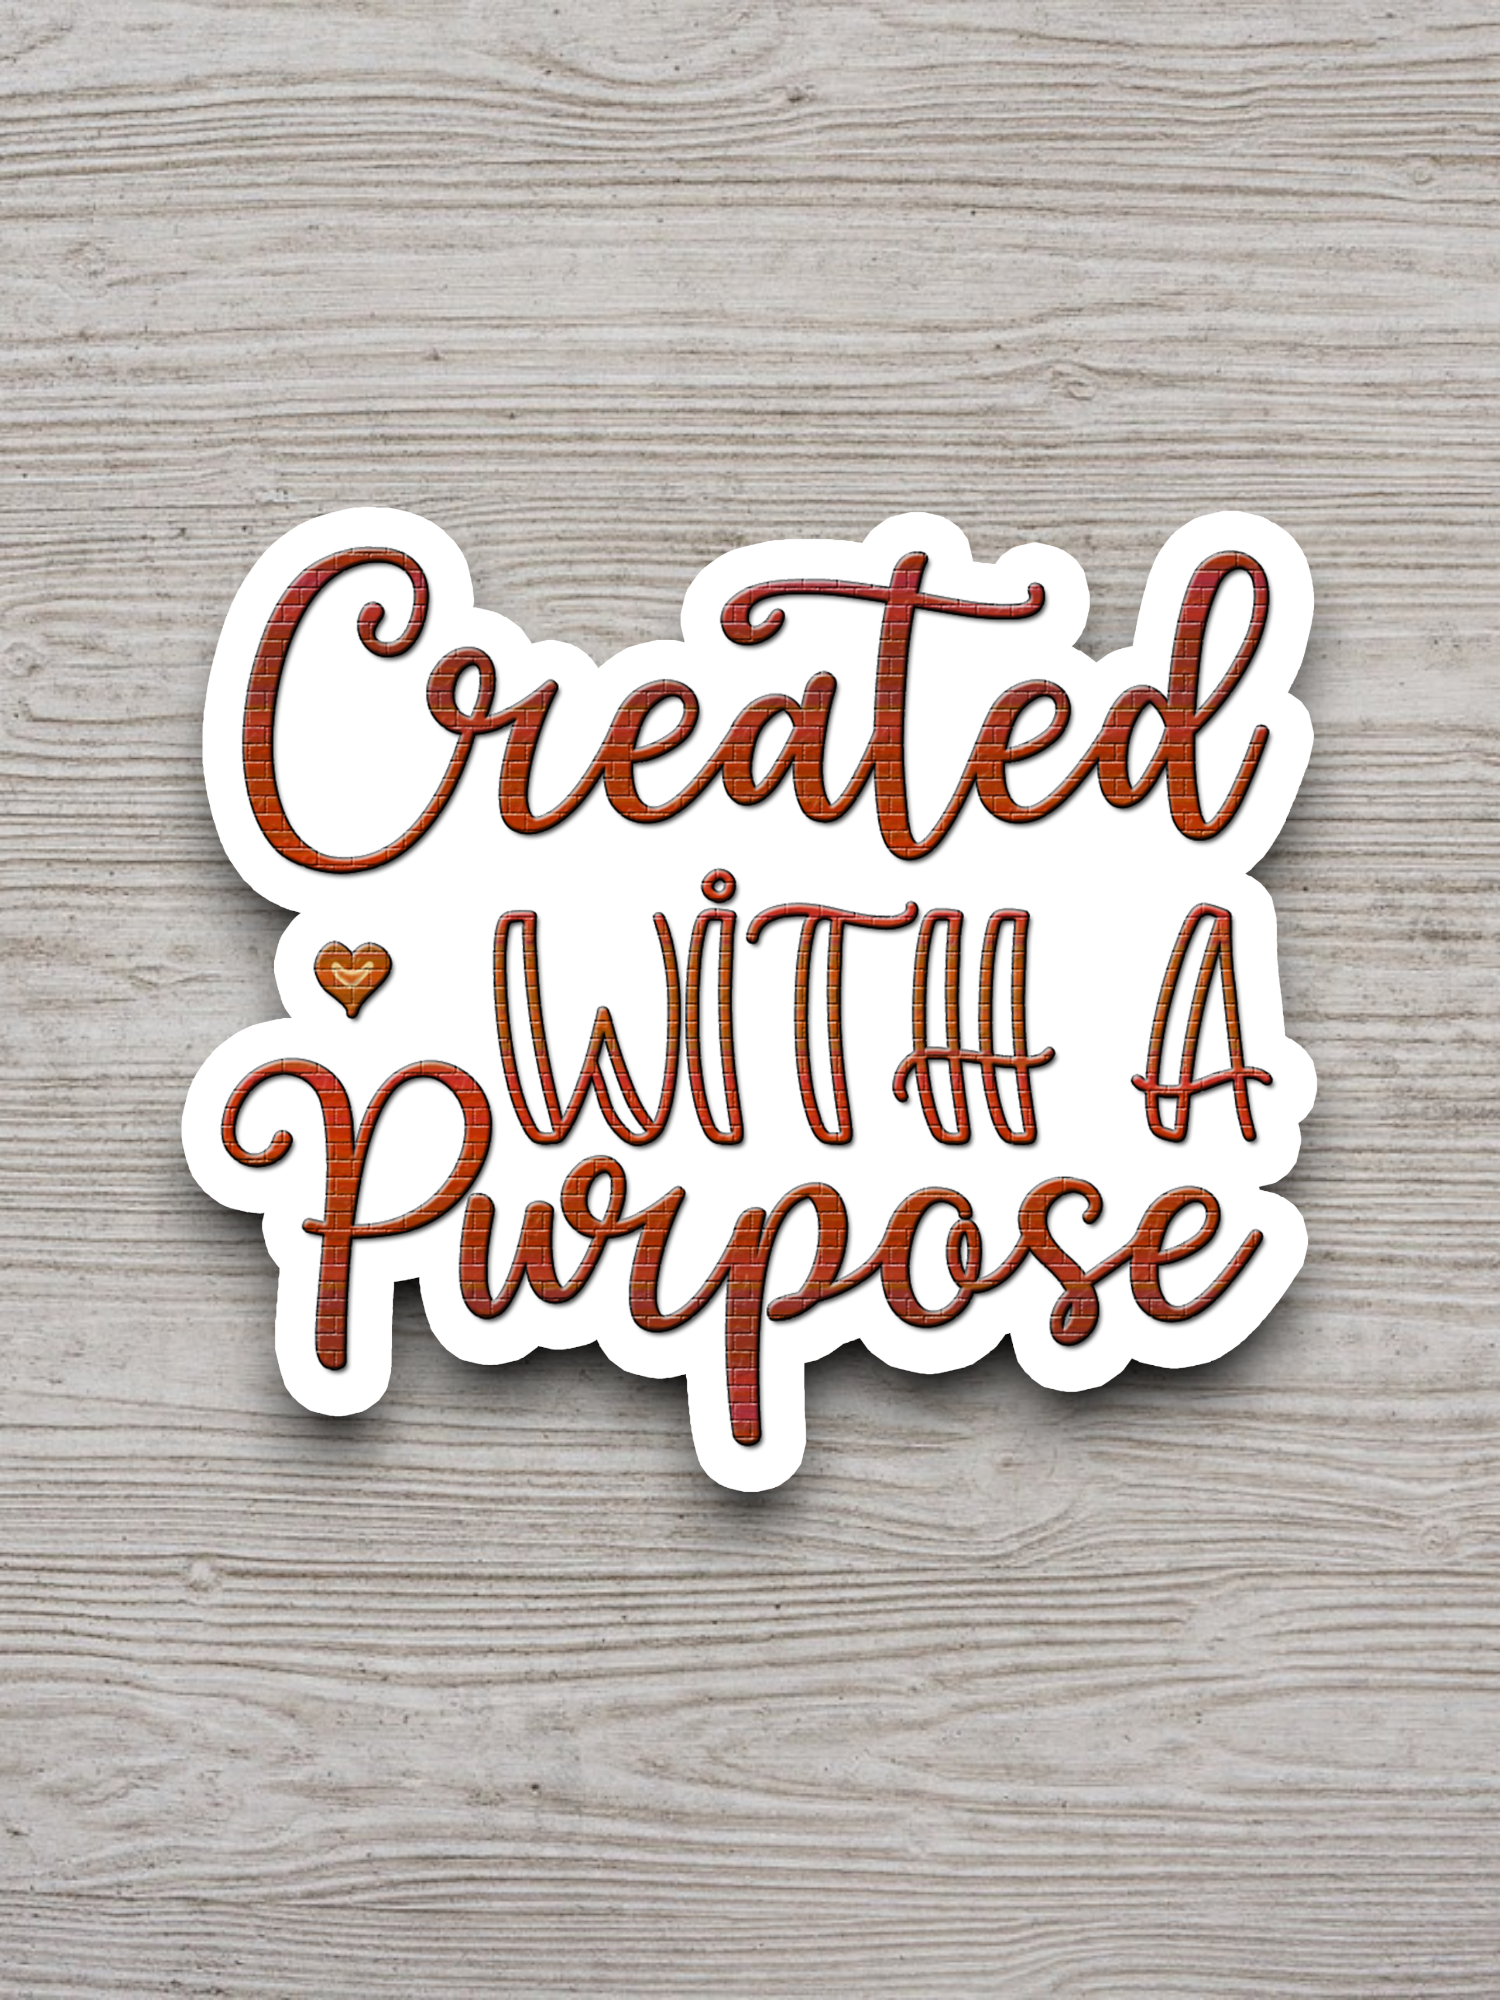 Created with a Purpose Faith Sticker